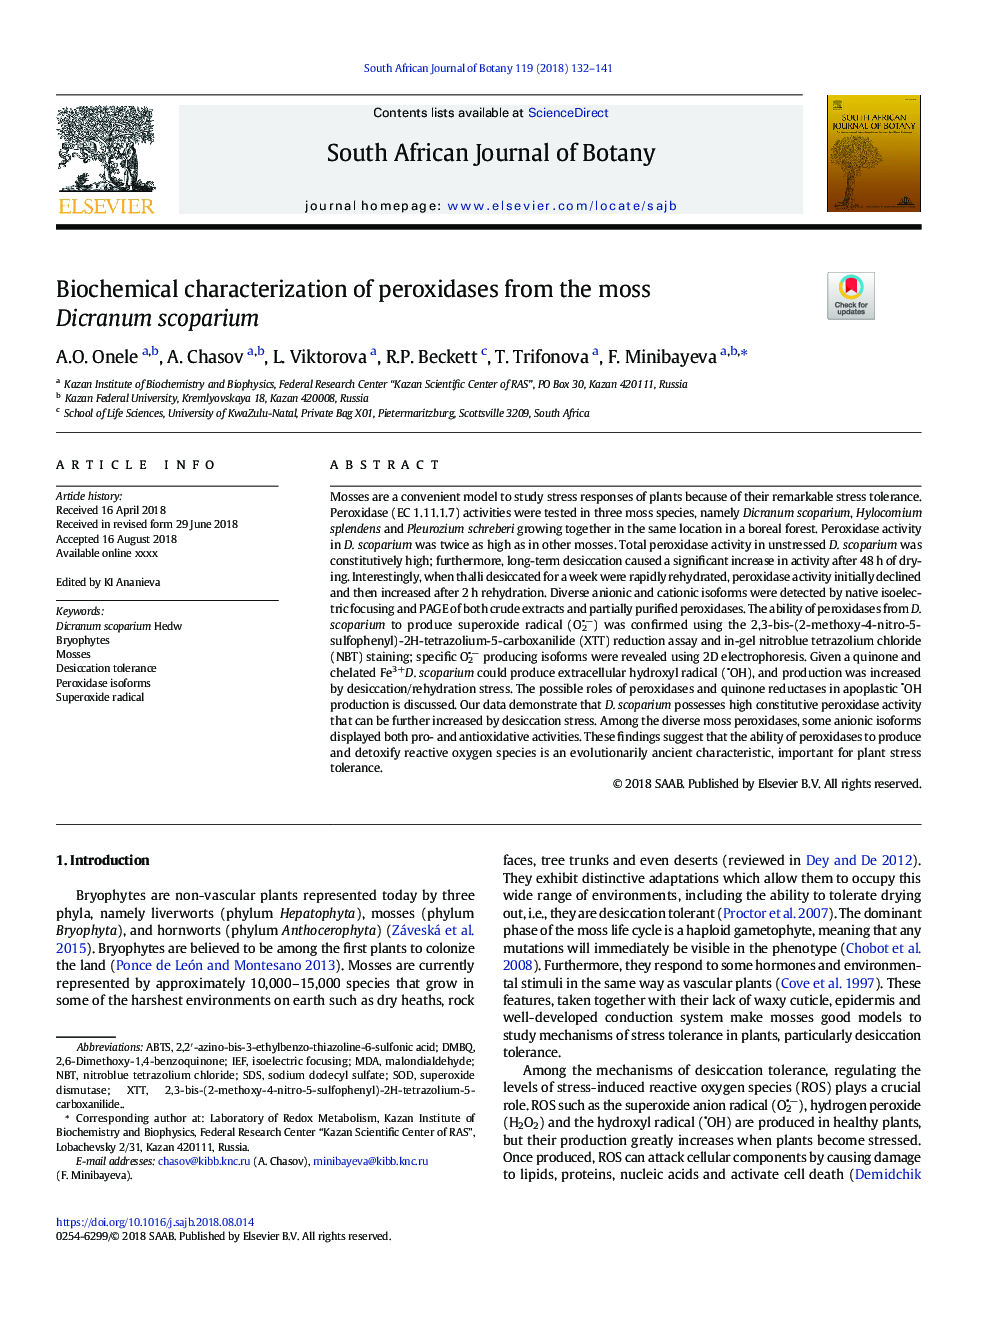 Biochemical characterization of peroxidases from the moss Dicranum scoparium